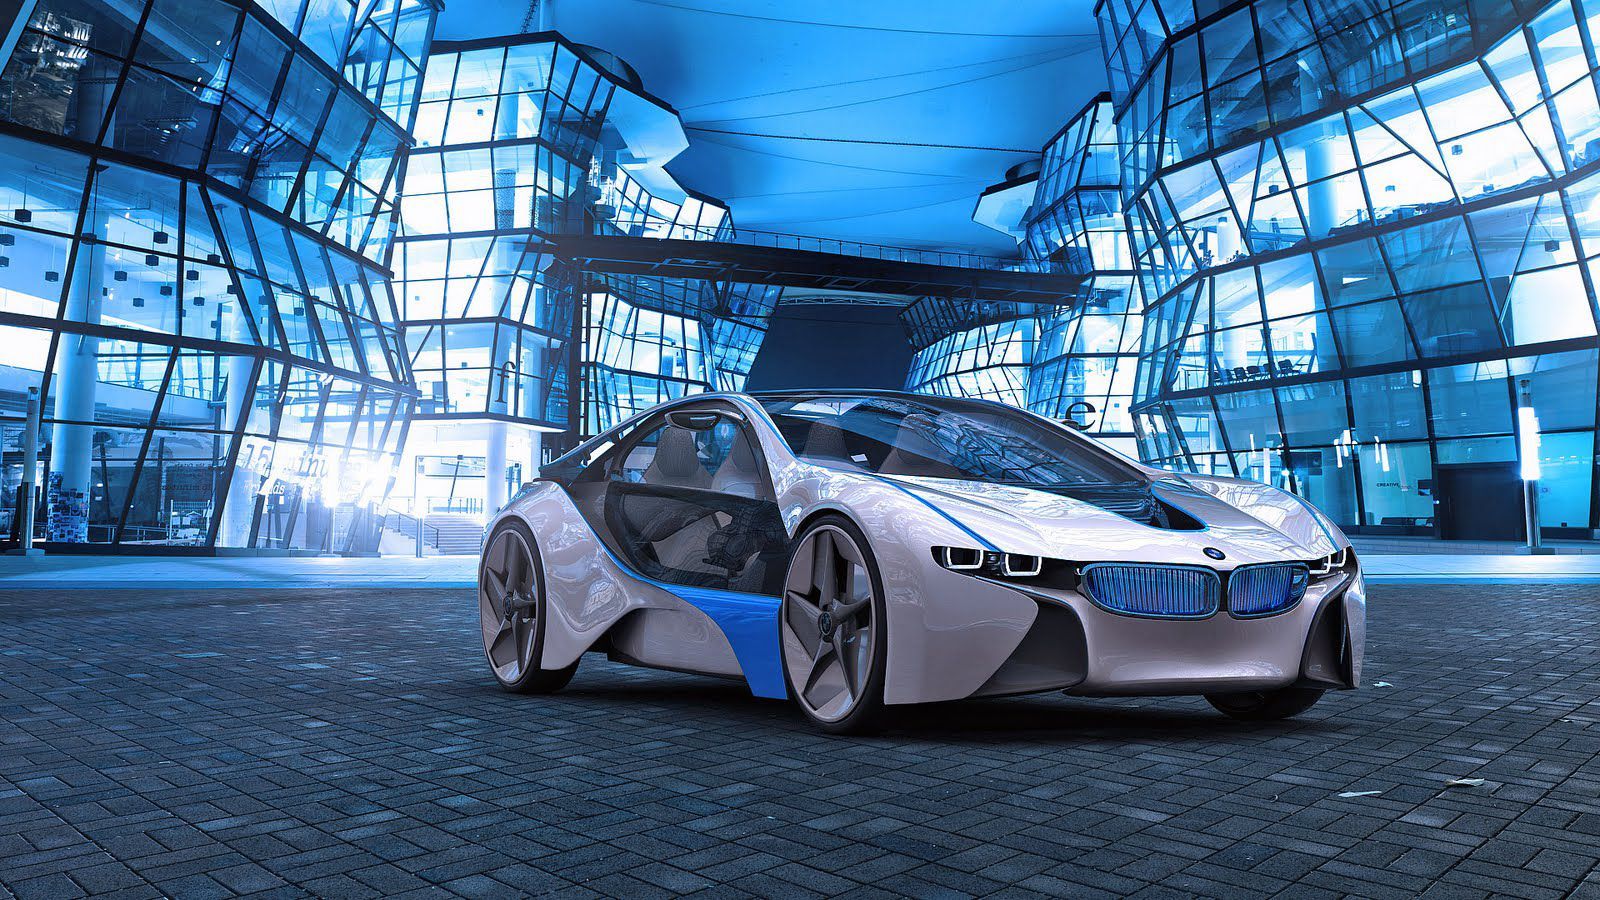 New Wallpaper and Videos BMW Vision EfficientDynamics. Supercars wallpaper, Bmw, Sports car wallpaper